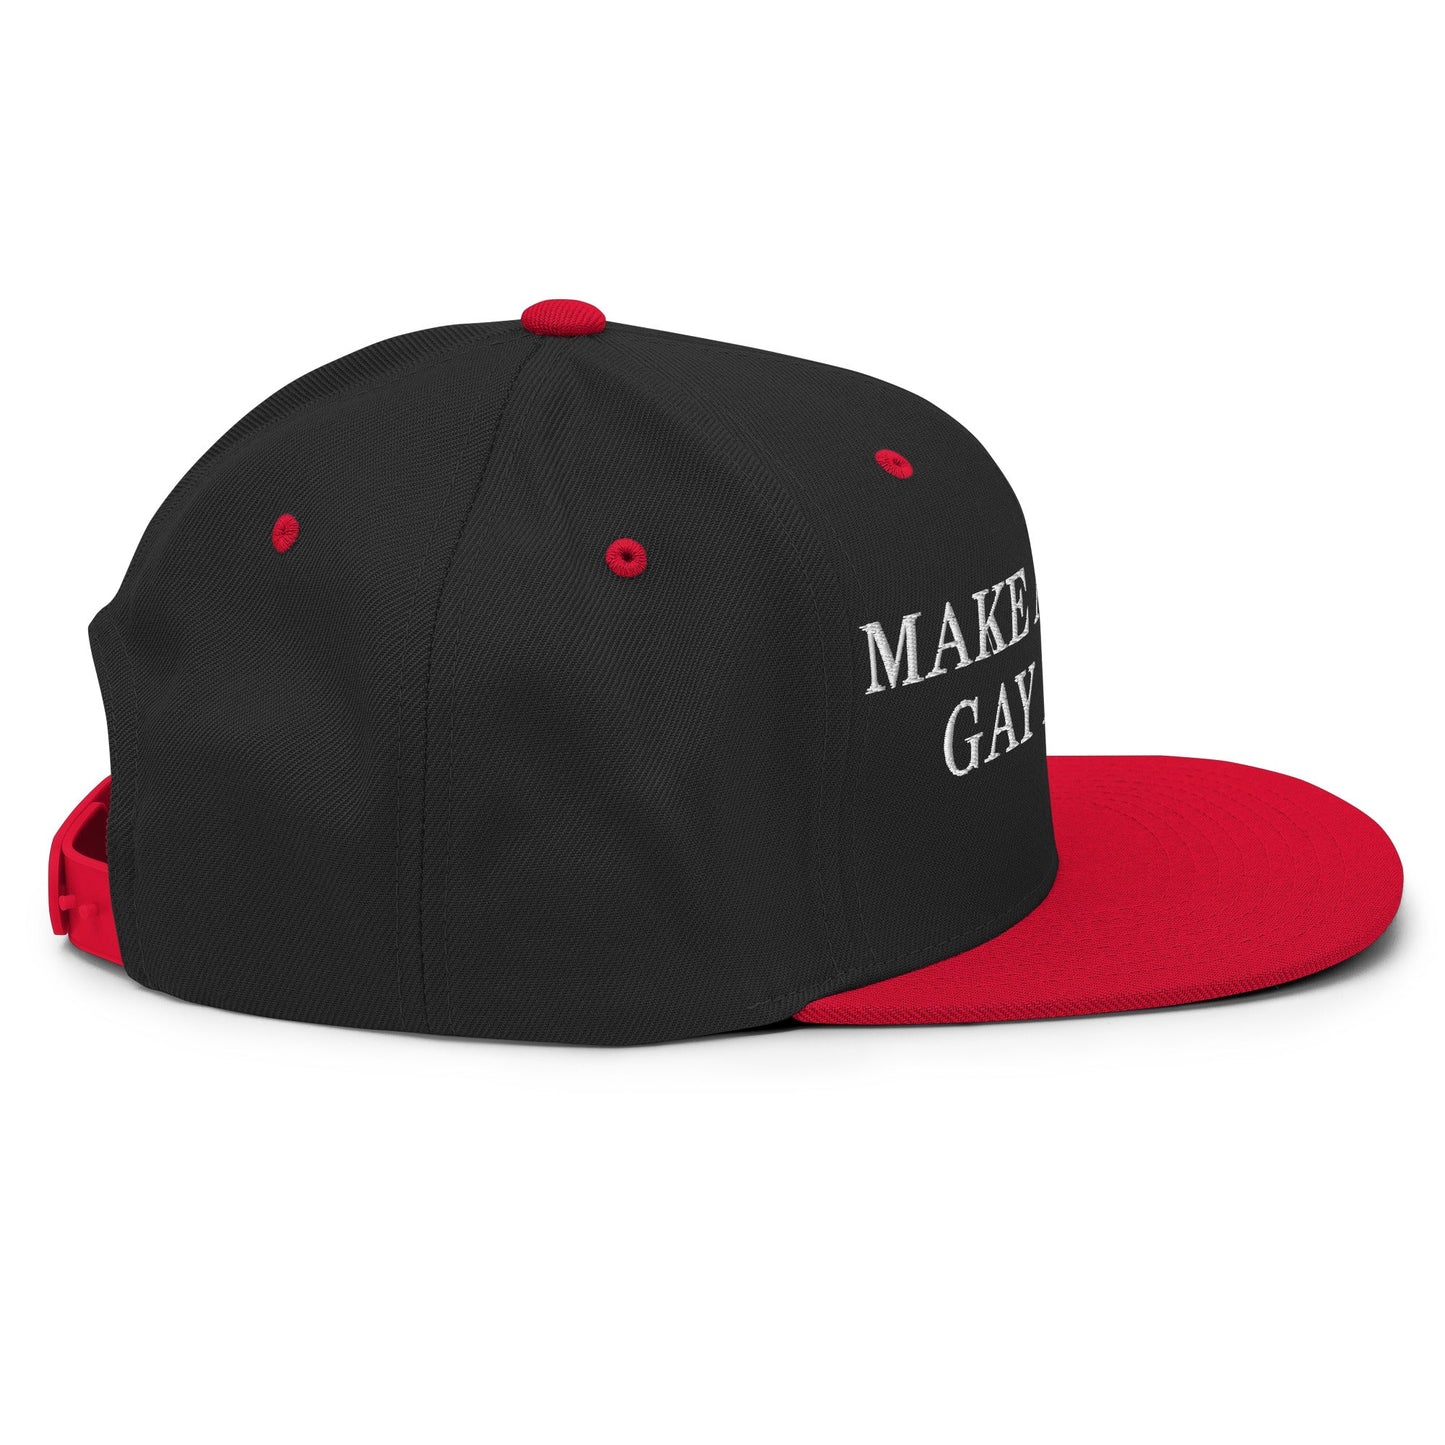 Make America Gay Again Pride MAGA Snapback Hat Black Red